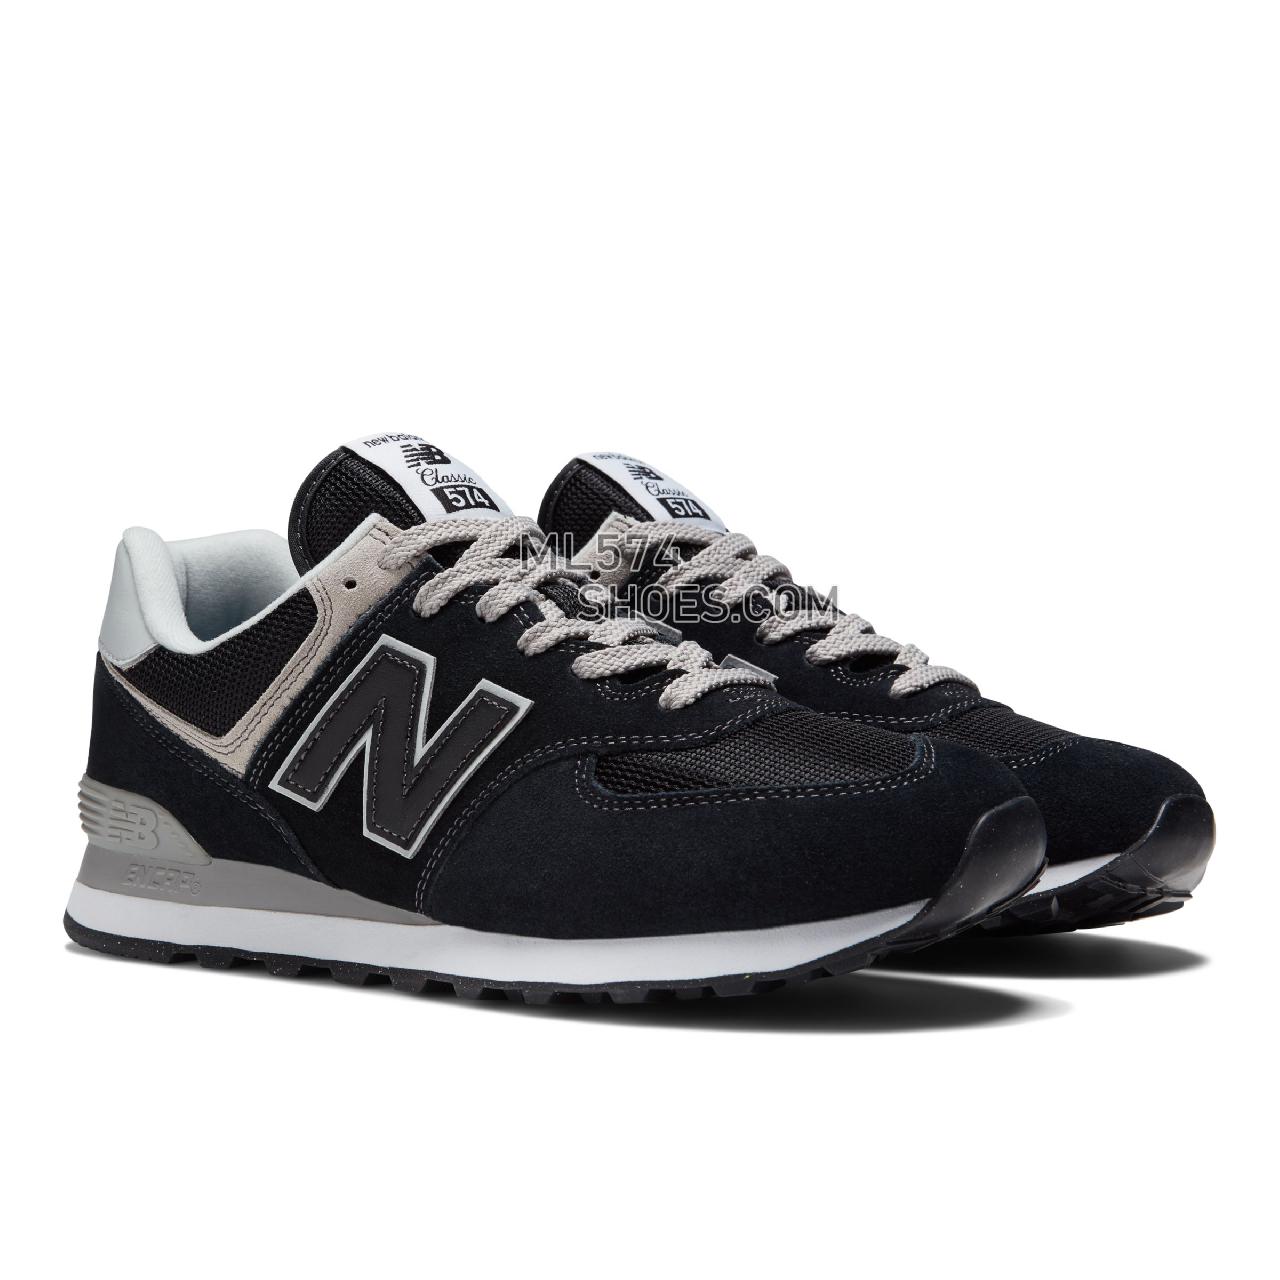 New Balance 574v3 - Men's Classic Sneakers - Black with White - ML574EVB